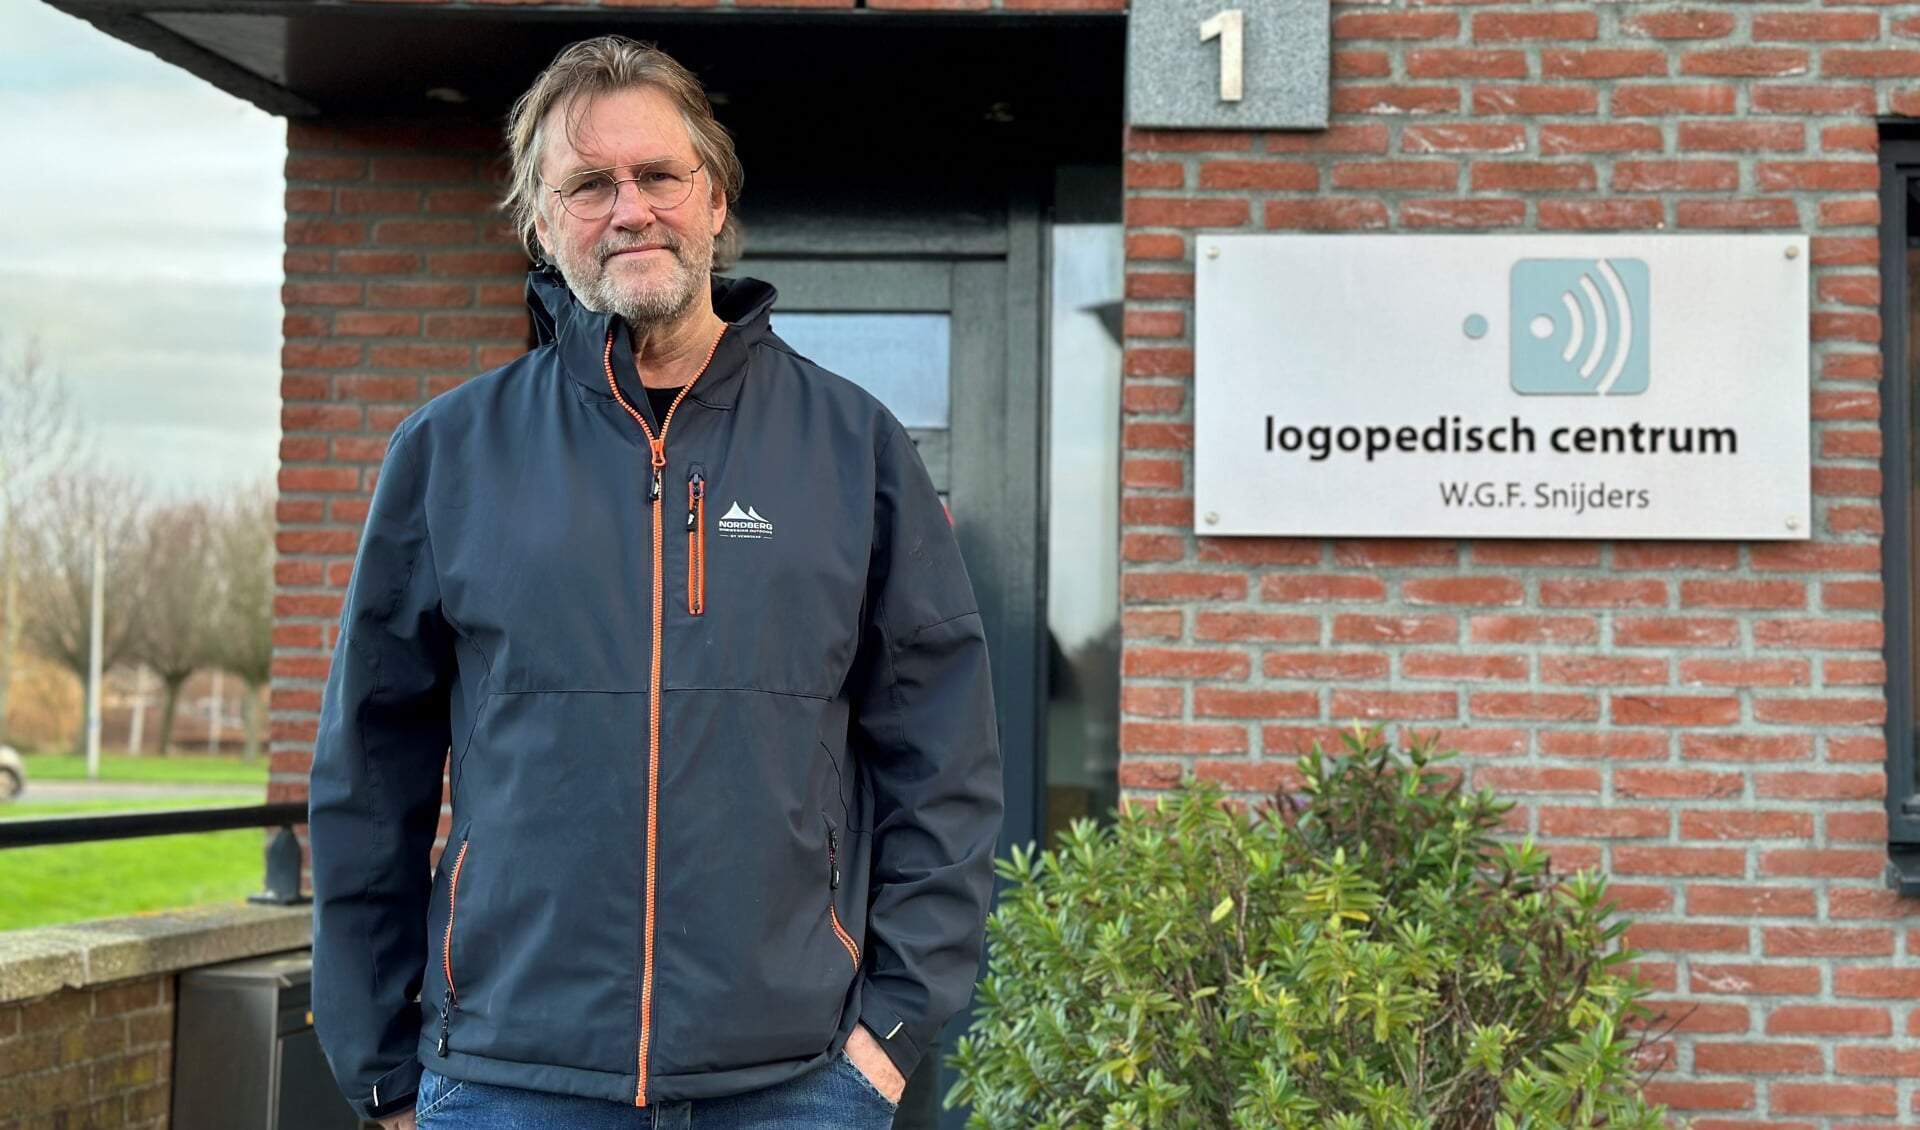 Logopedist Willem Snijders